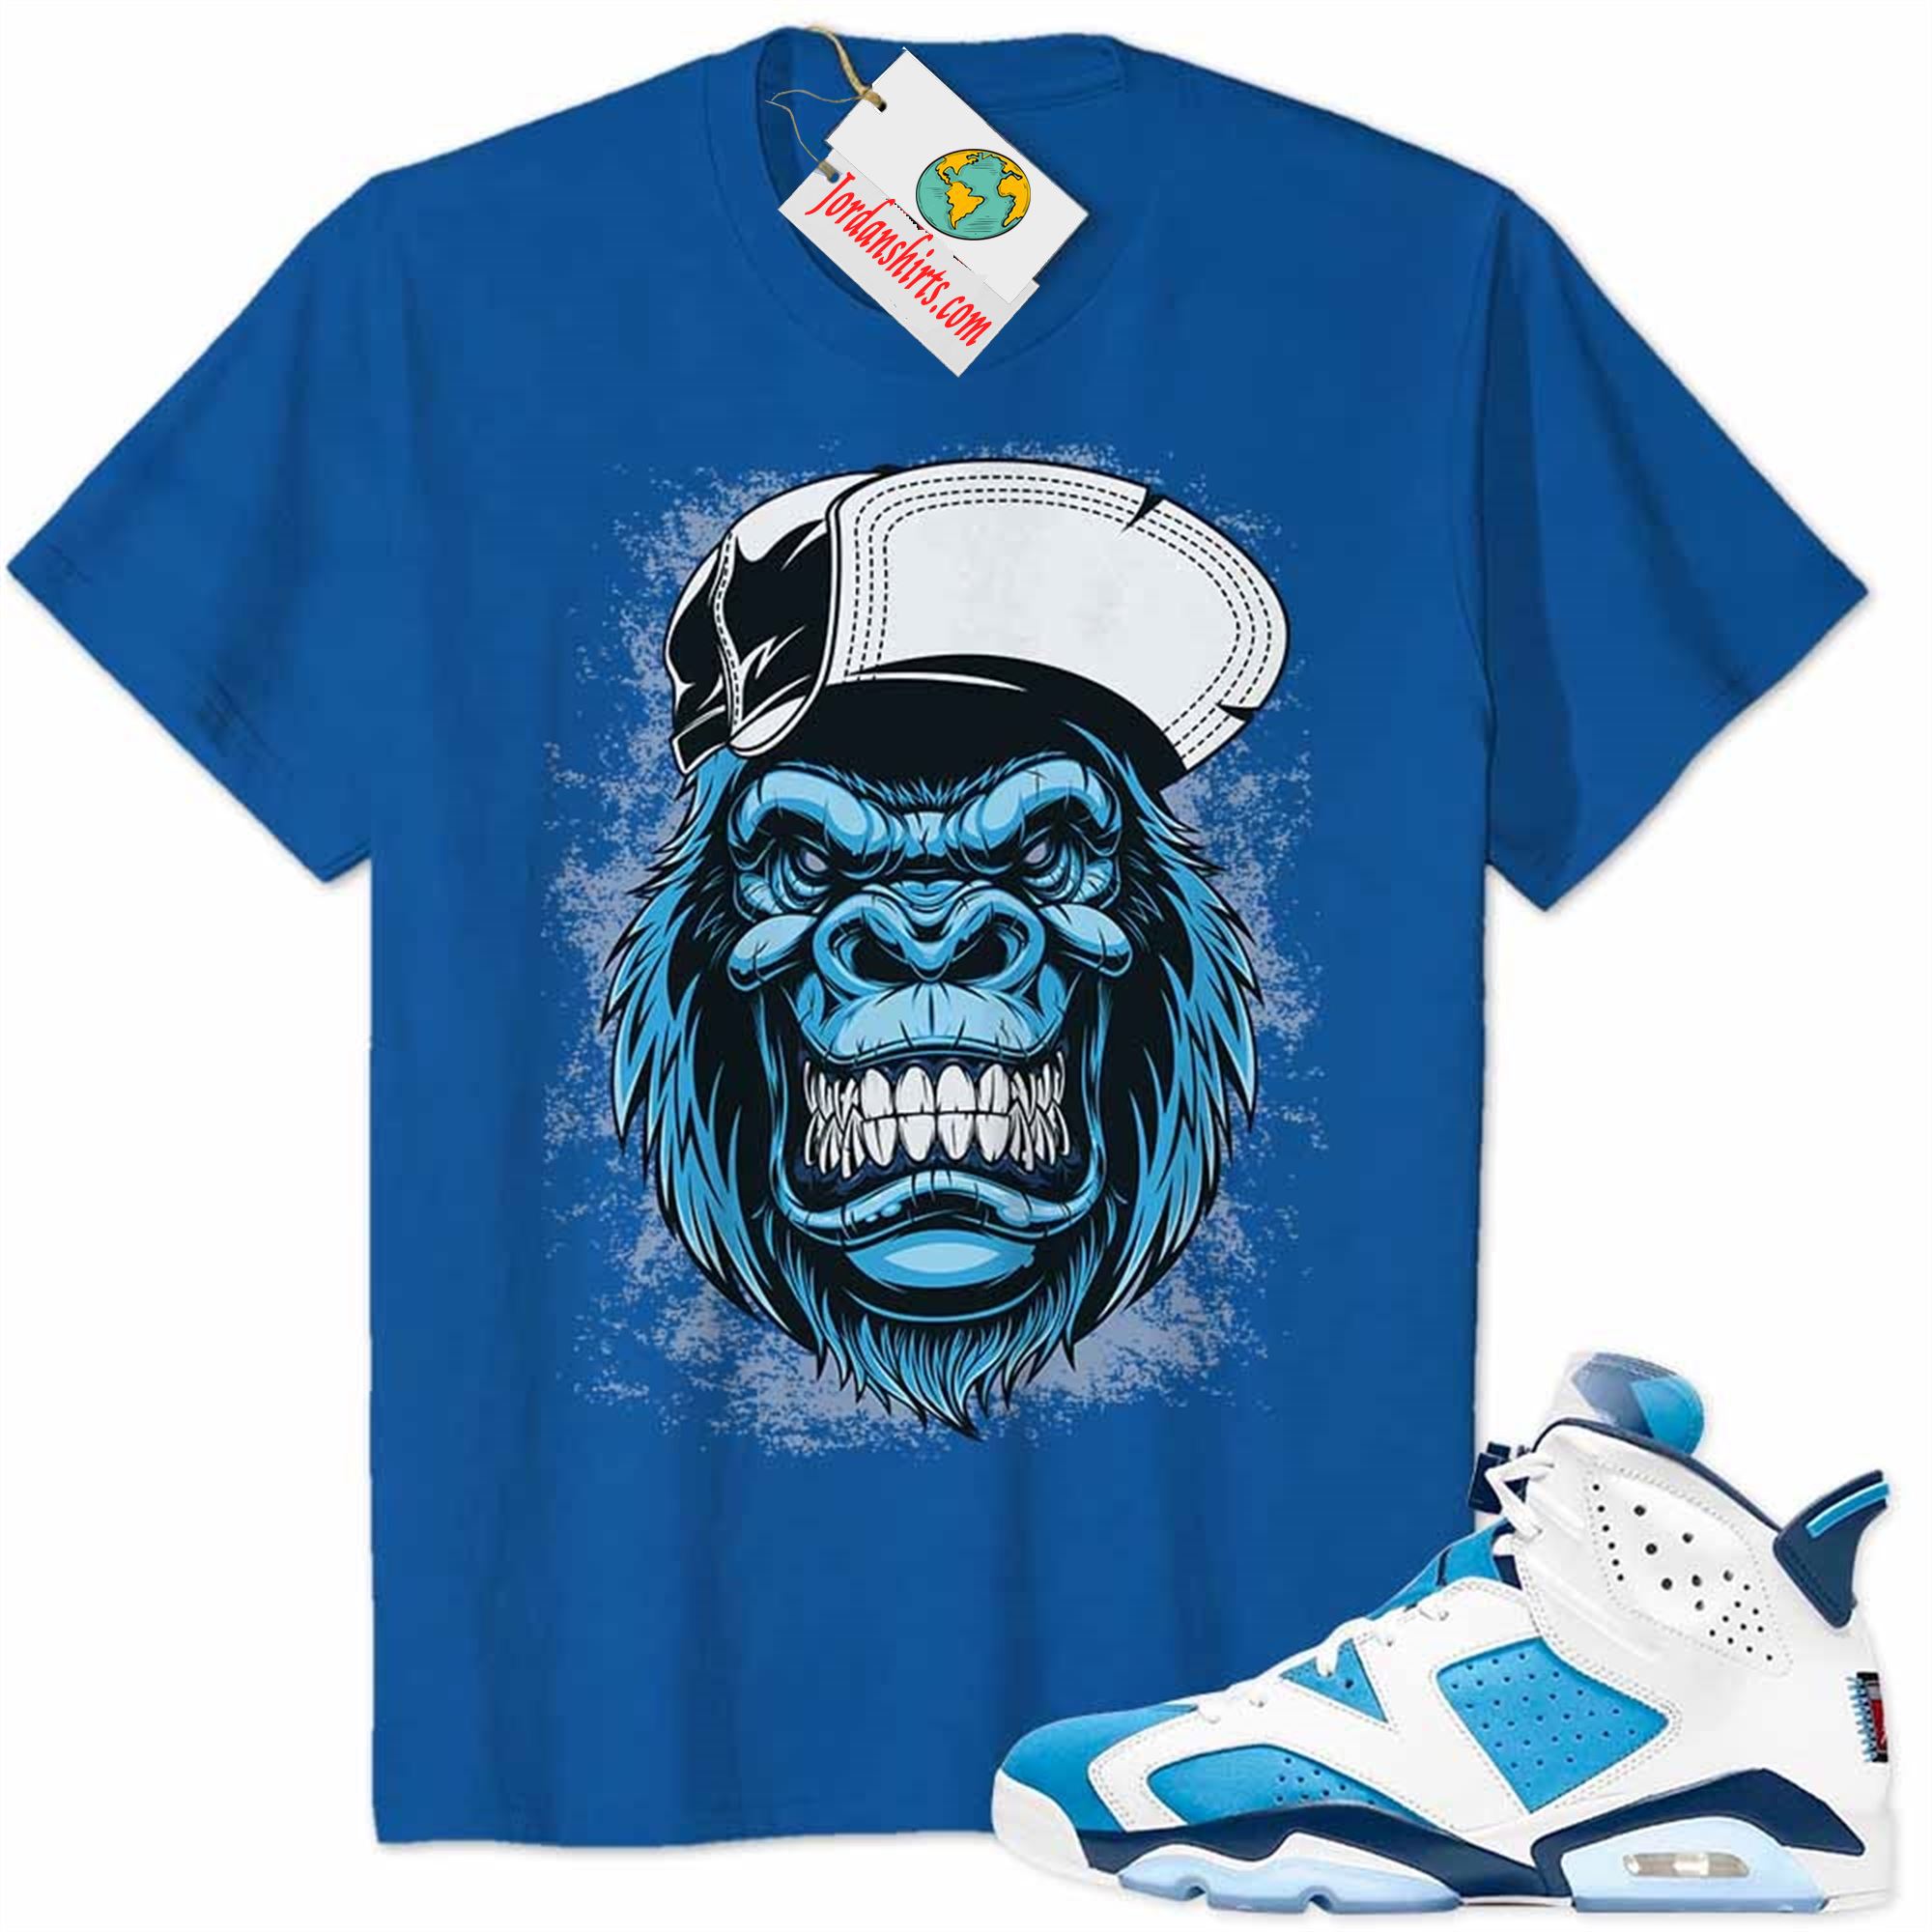 Jordan 6 Shirt, Ferocious Gorilla Blue Air Jordan 6 Unc 6s Plus Size Up To 5xl